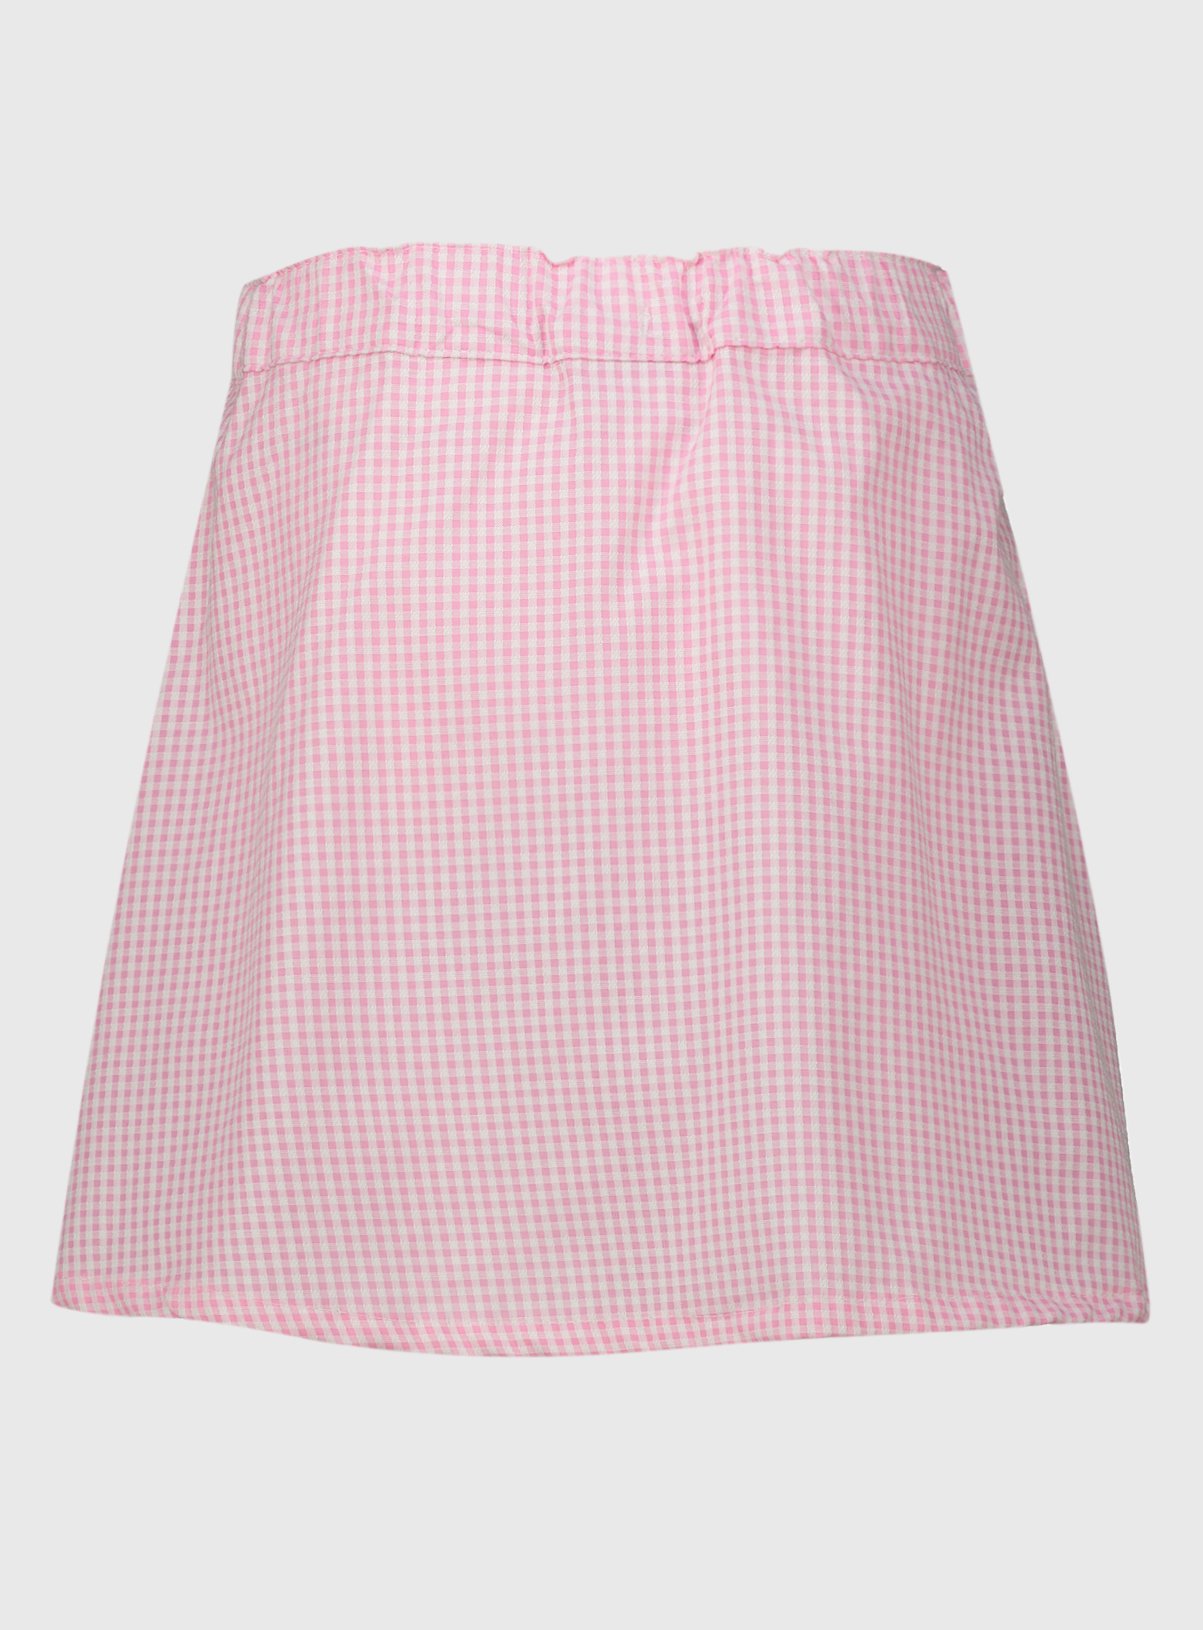 Buy Pink Gingham Easy Iron School Skirt ...